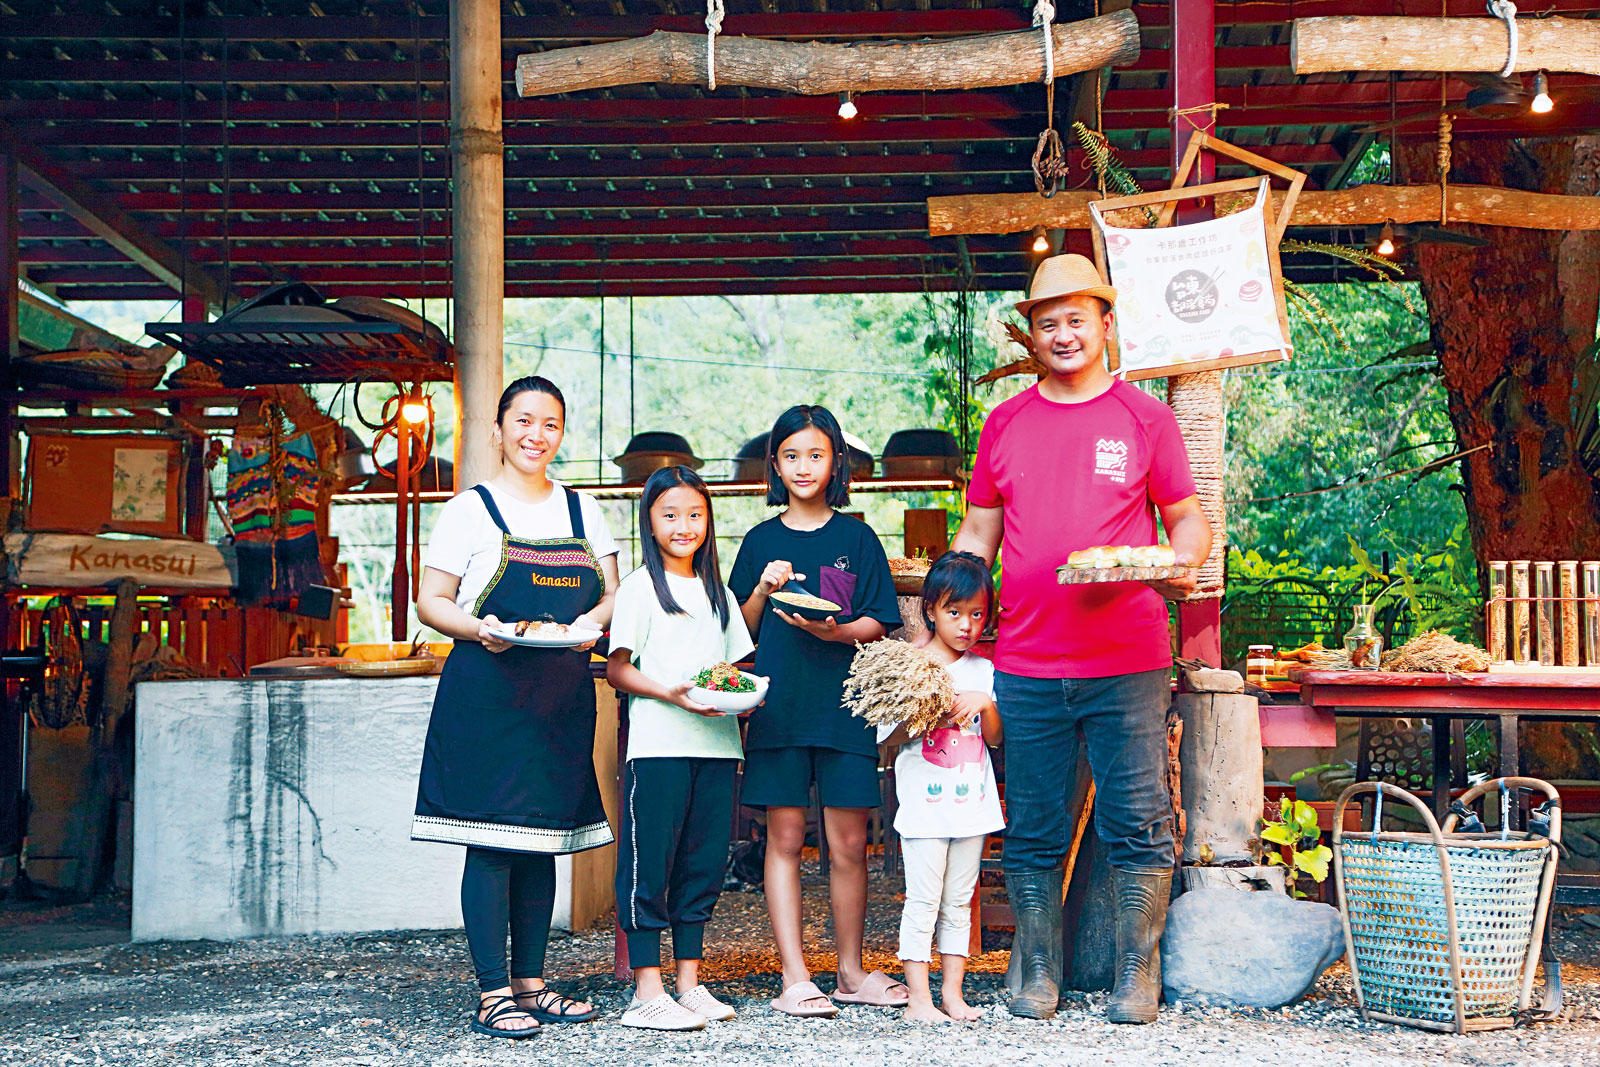 Biung（右）帶著太太Ngavan（左）和孩子從都會返鄉，在布谷拉夫部落打造卡那歲工作坊，端出一道又一道發揮創意的油芒美味料理。（攝影：王士豪）